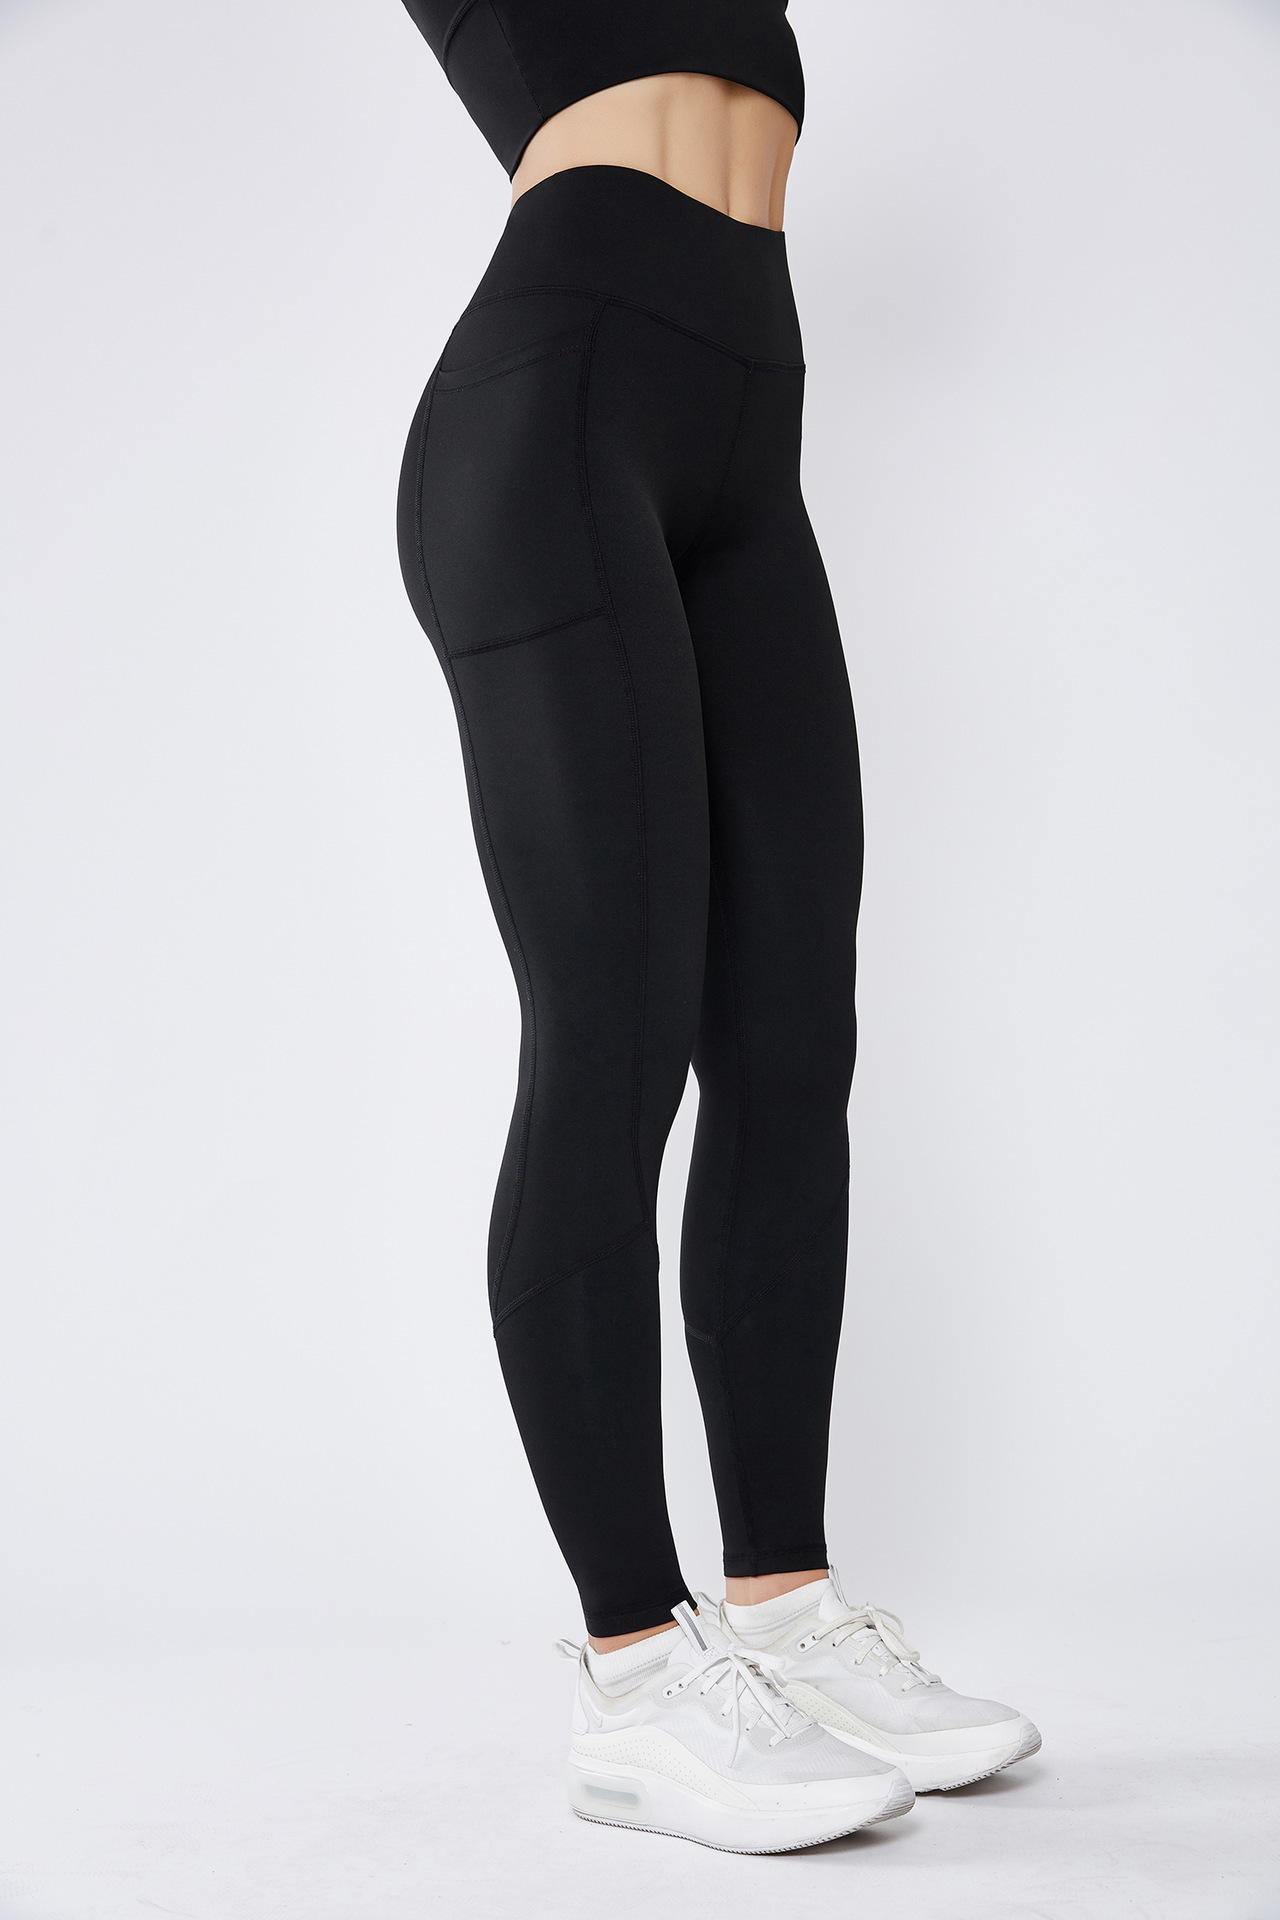 New Sports Pocket Yoga Pants High Elastic Peach Hip Raise High Waist Fitness Pants Outdoor Tight Trousers